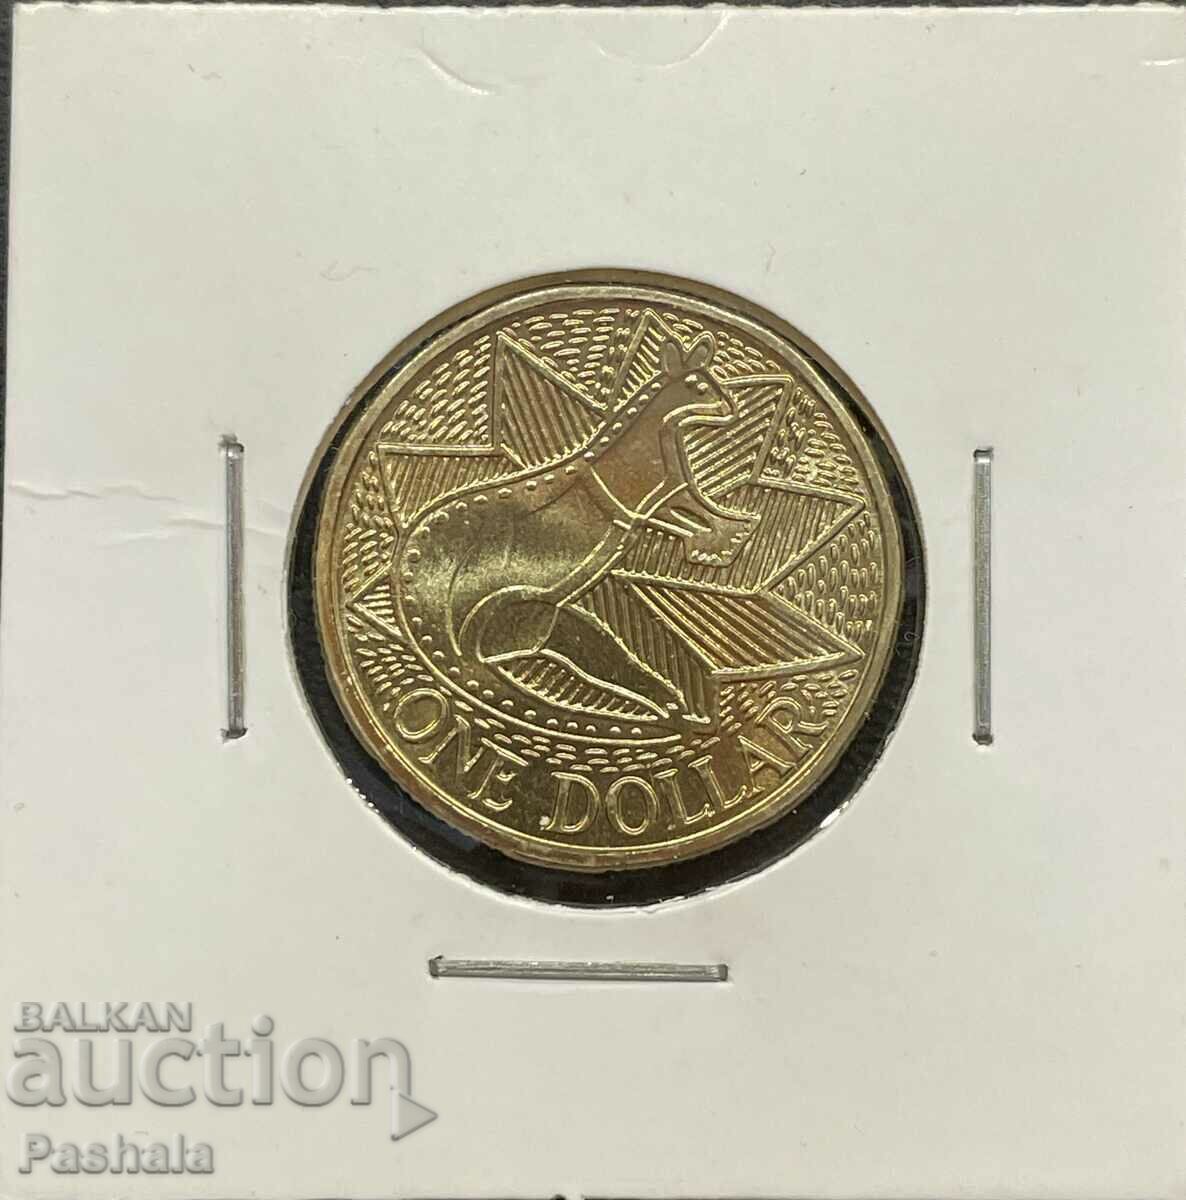 Australia 1 USD 1988